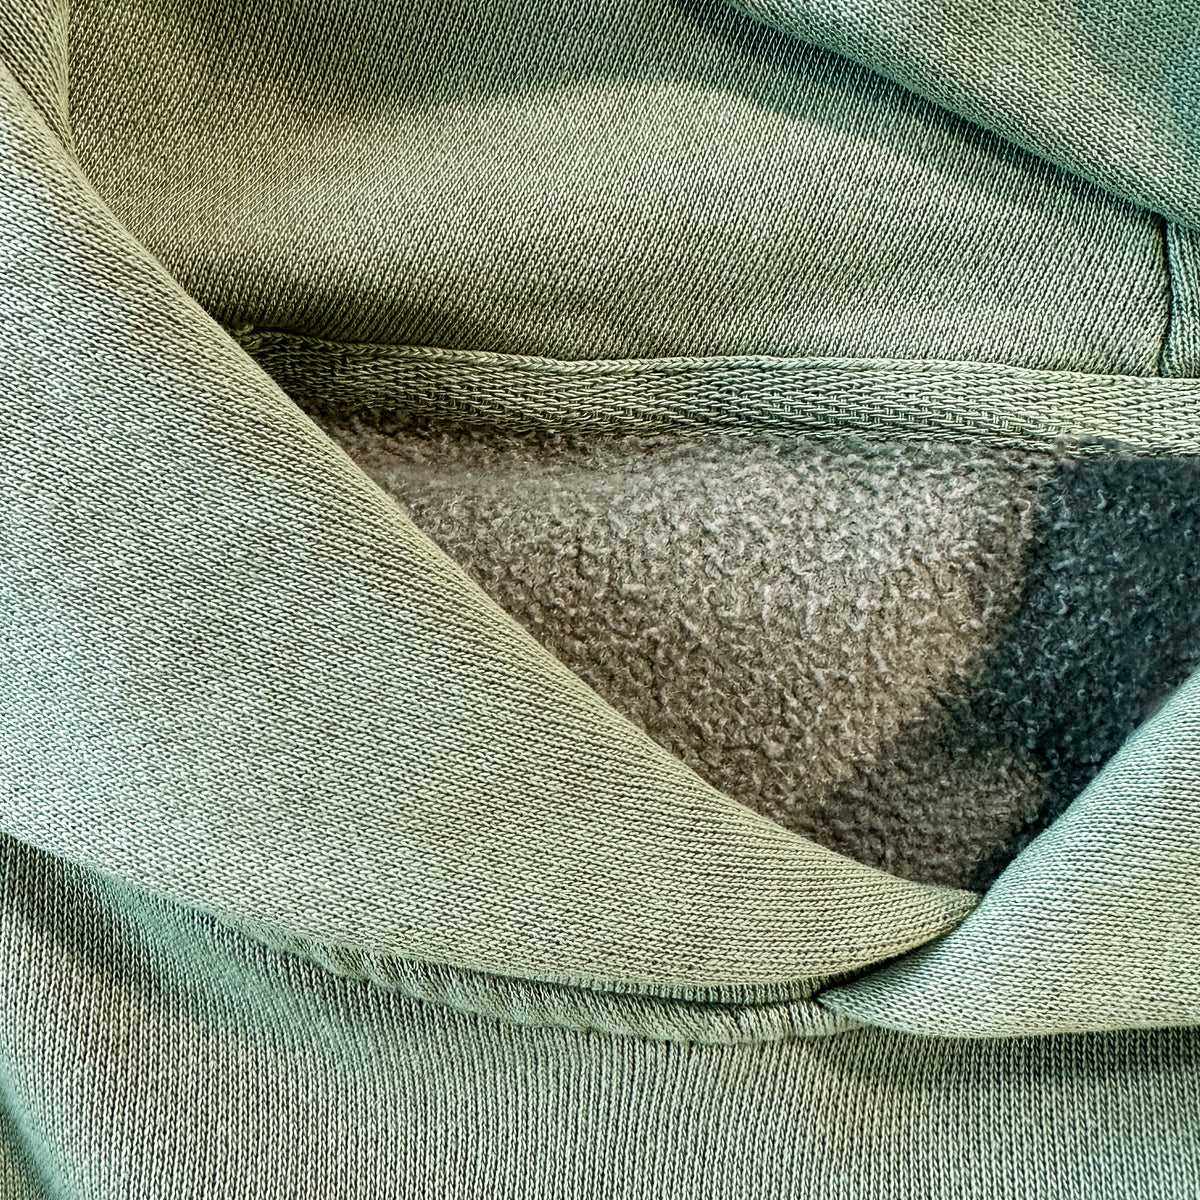 Common Loon - Gavia immer  - Urban Heavyweight Hoodie